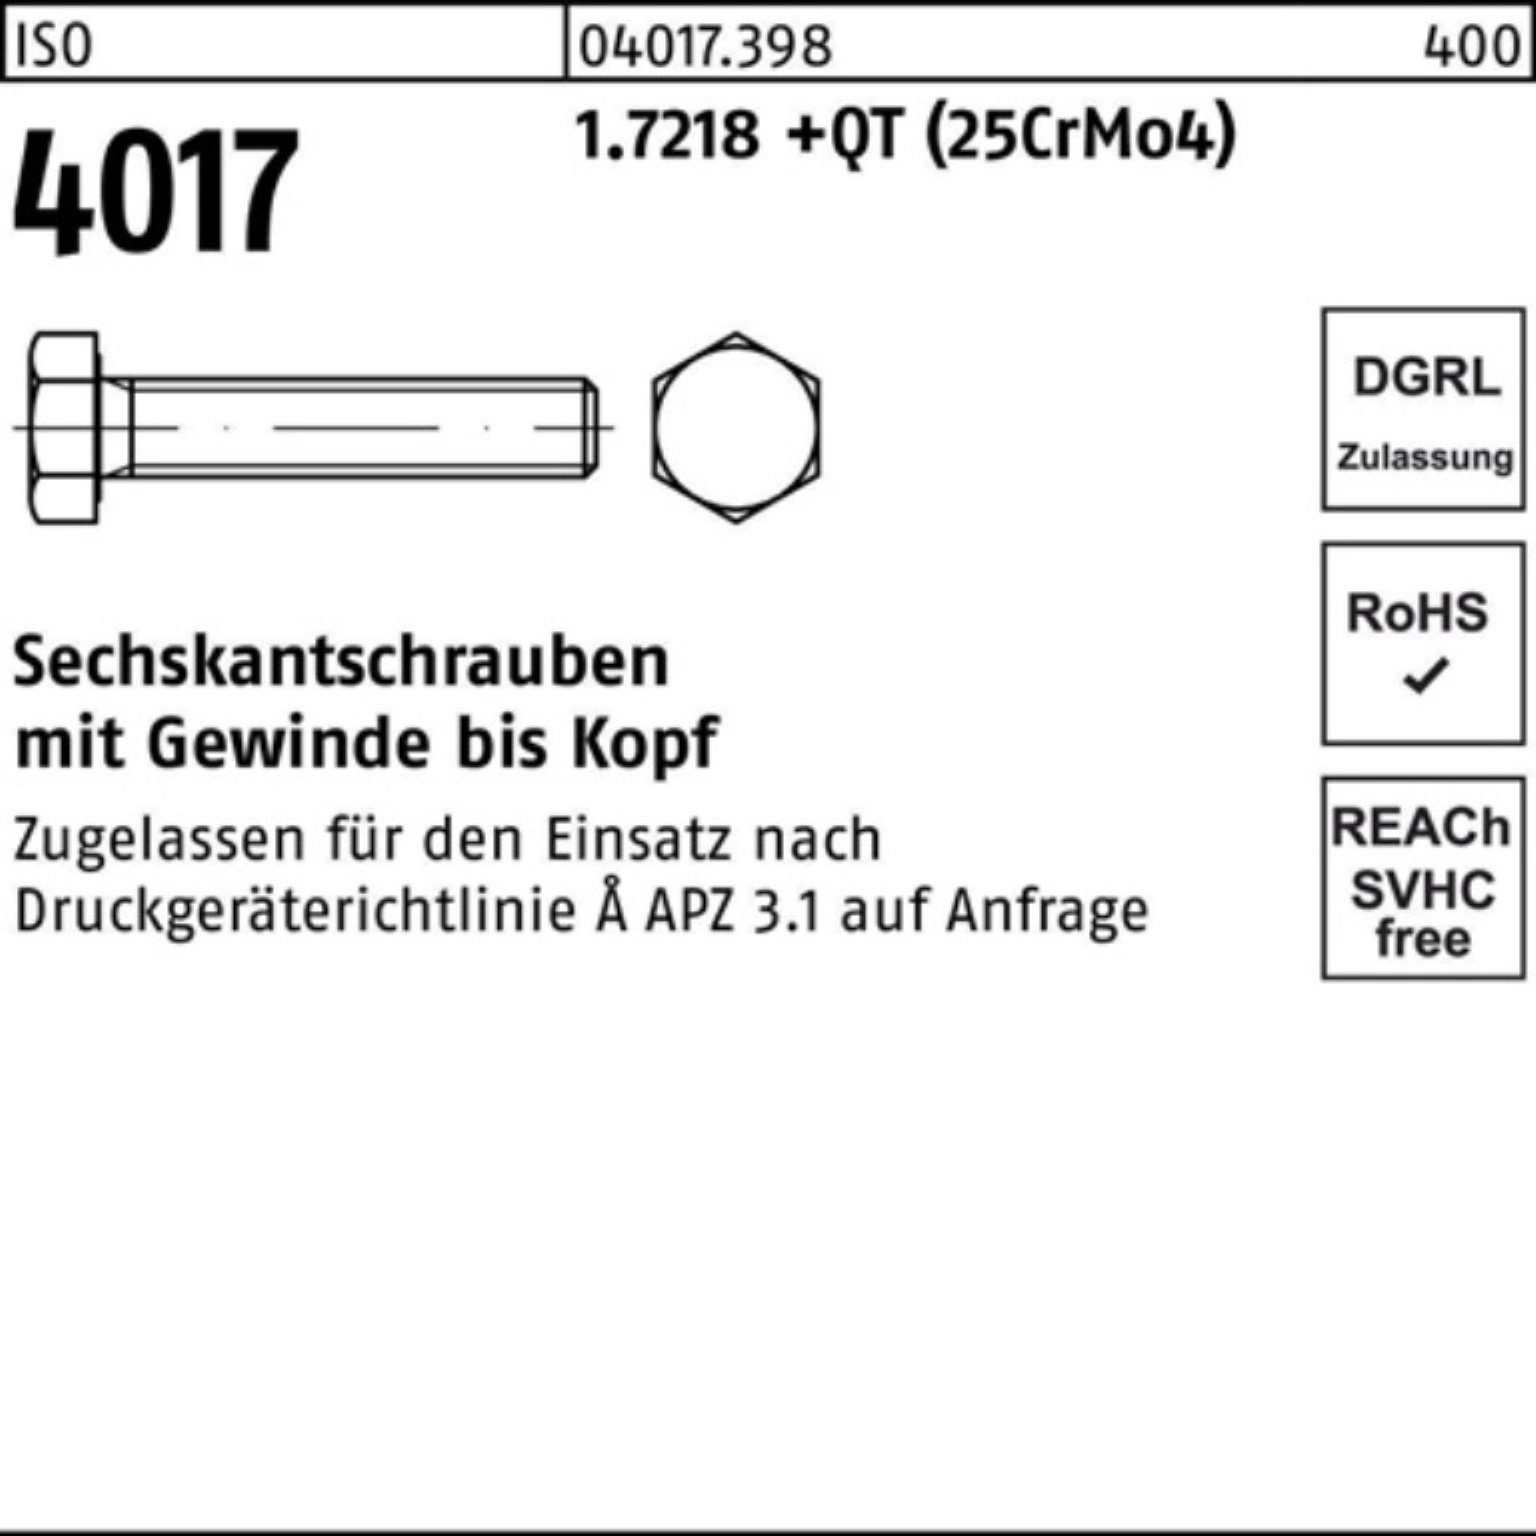 Bufab Sechskantschraube 100er Sechskantschraube Pack ISO M24x 1.7218 180 (25CrMo4) +QT VG 4017